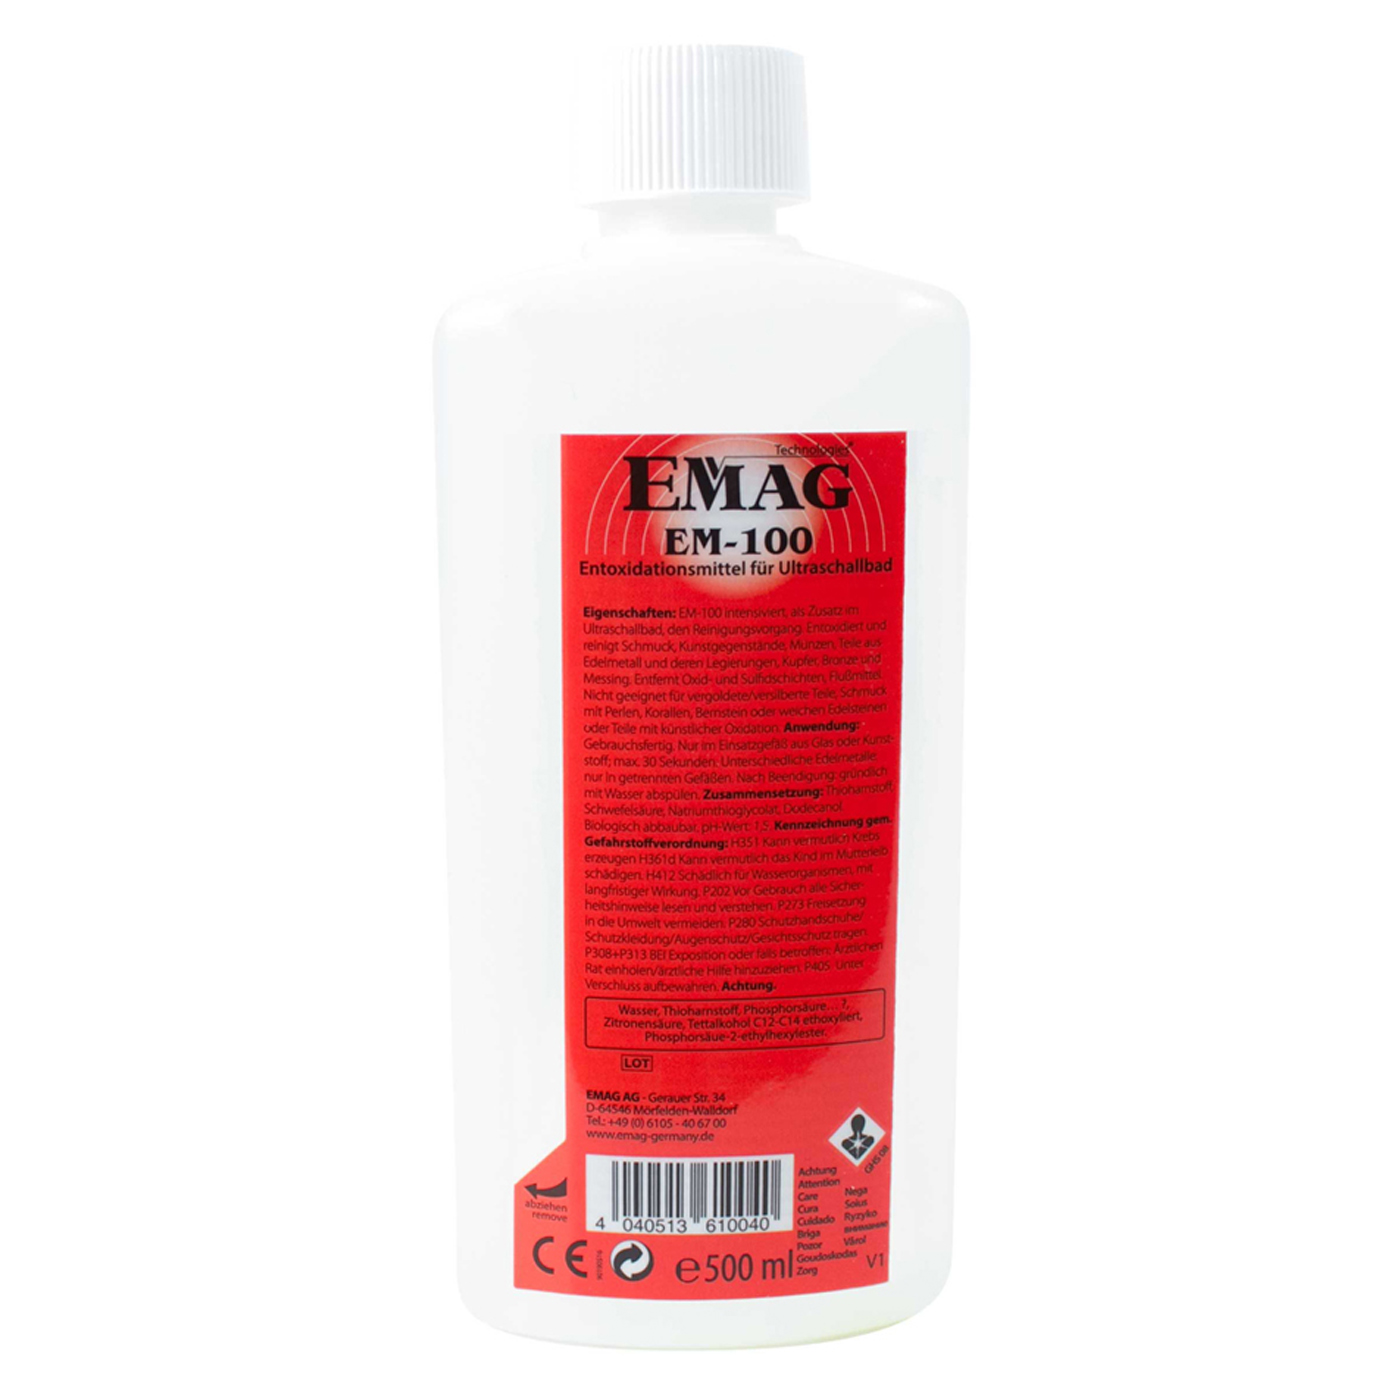 EMAG AG EM-100 Entoxidationsmittel - 500 ml